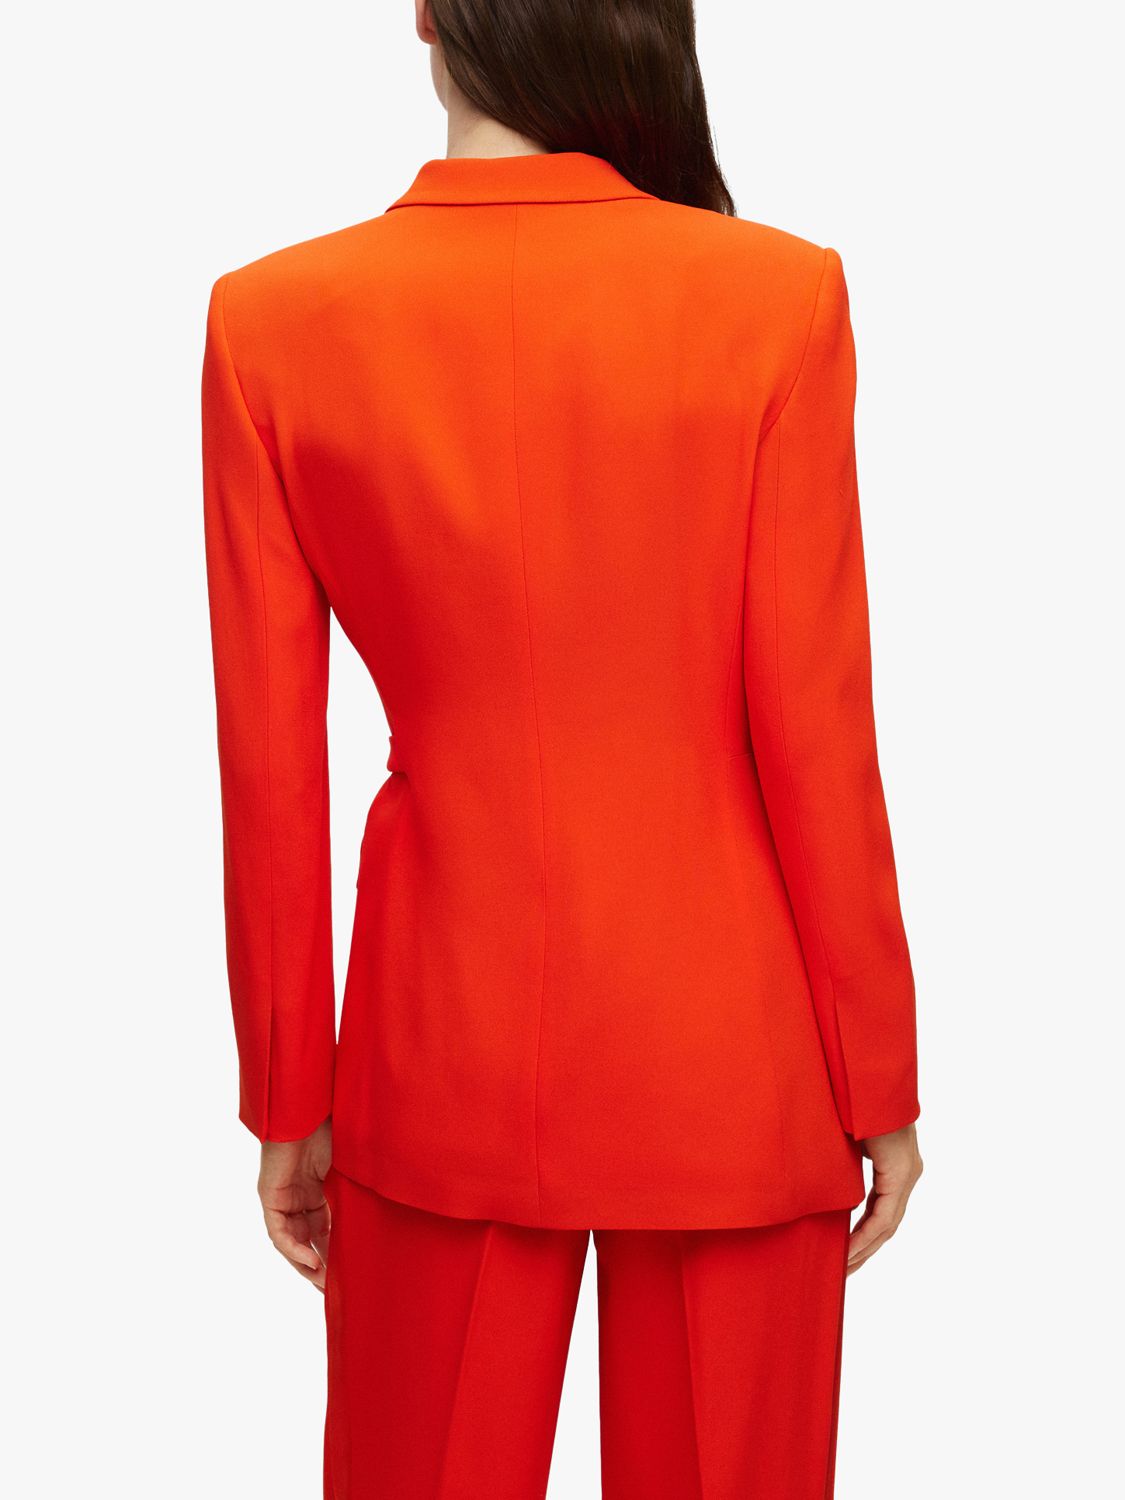 HUGO BOSS Jawana Wrap Blazer, Bright Orange at John Lewis & Partners